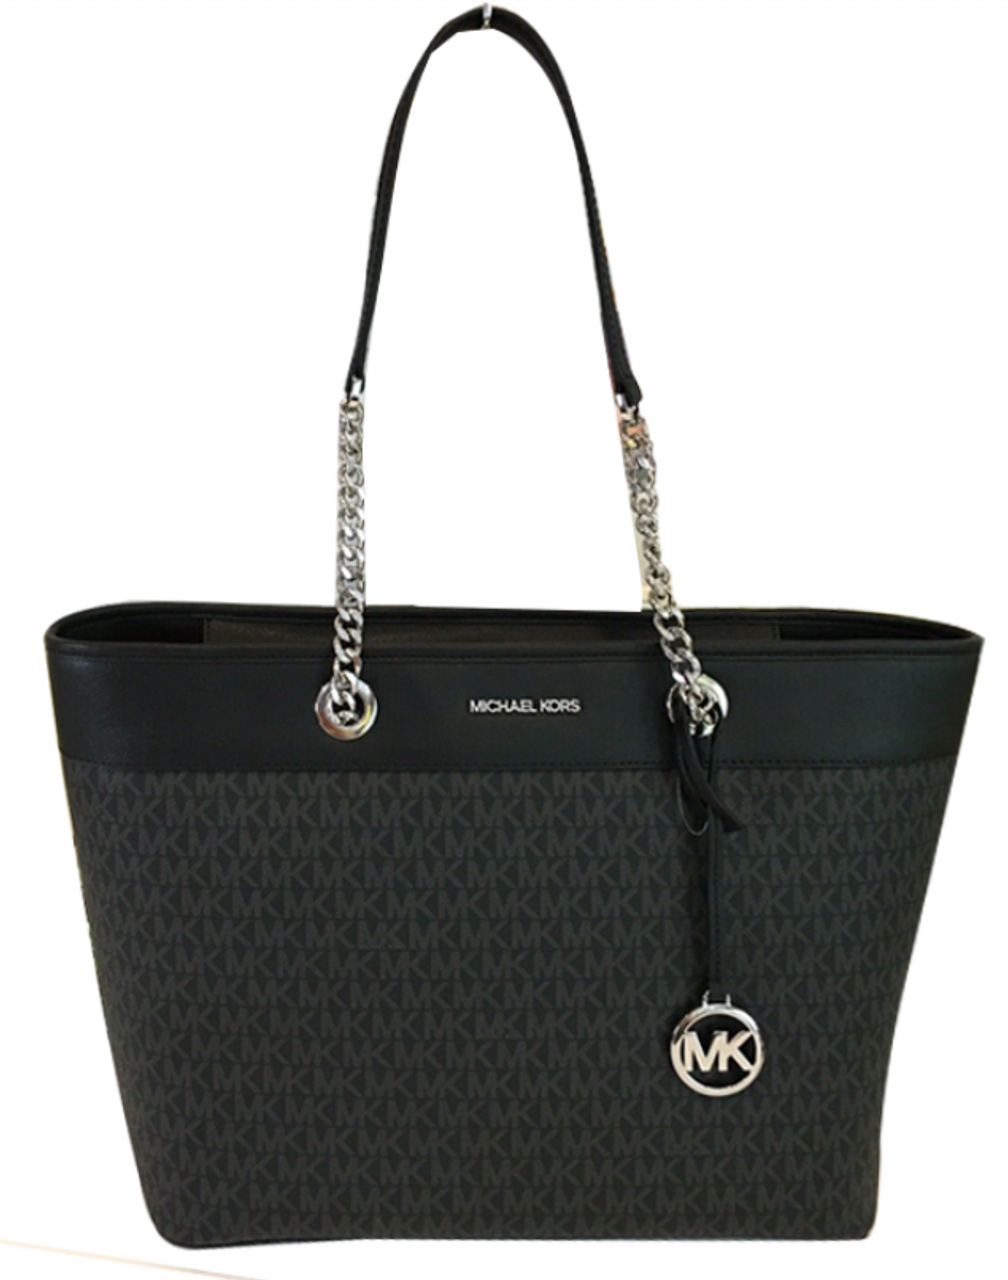 Michael Kors | Bags | Michael Kors Signature Tote Bag With Chain Detail |  Poshmark